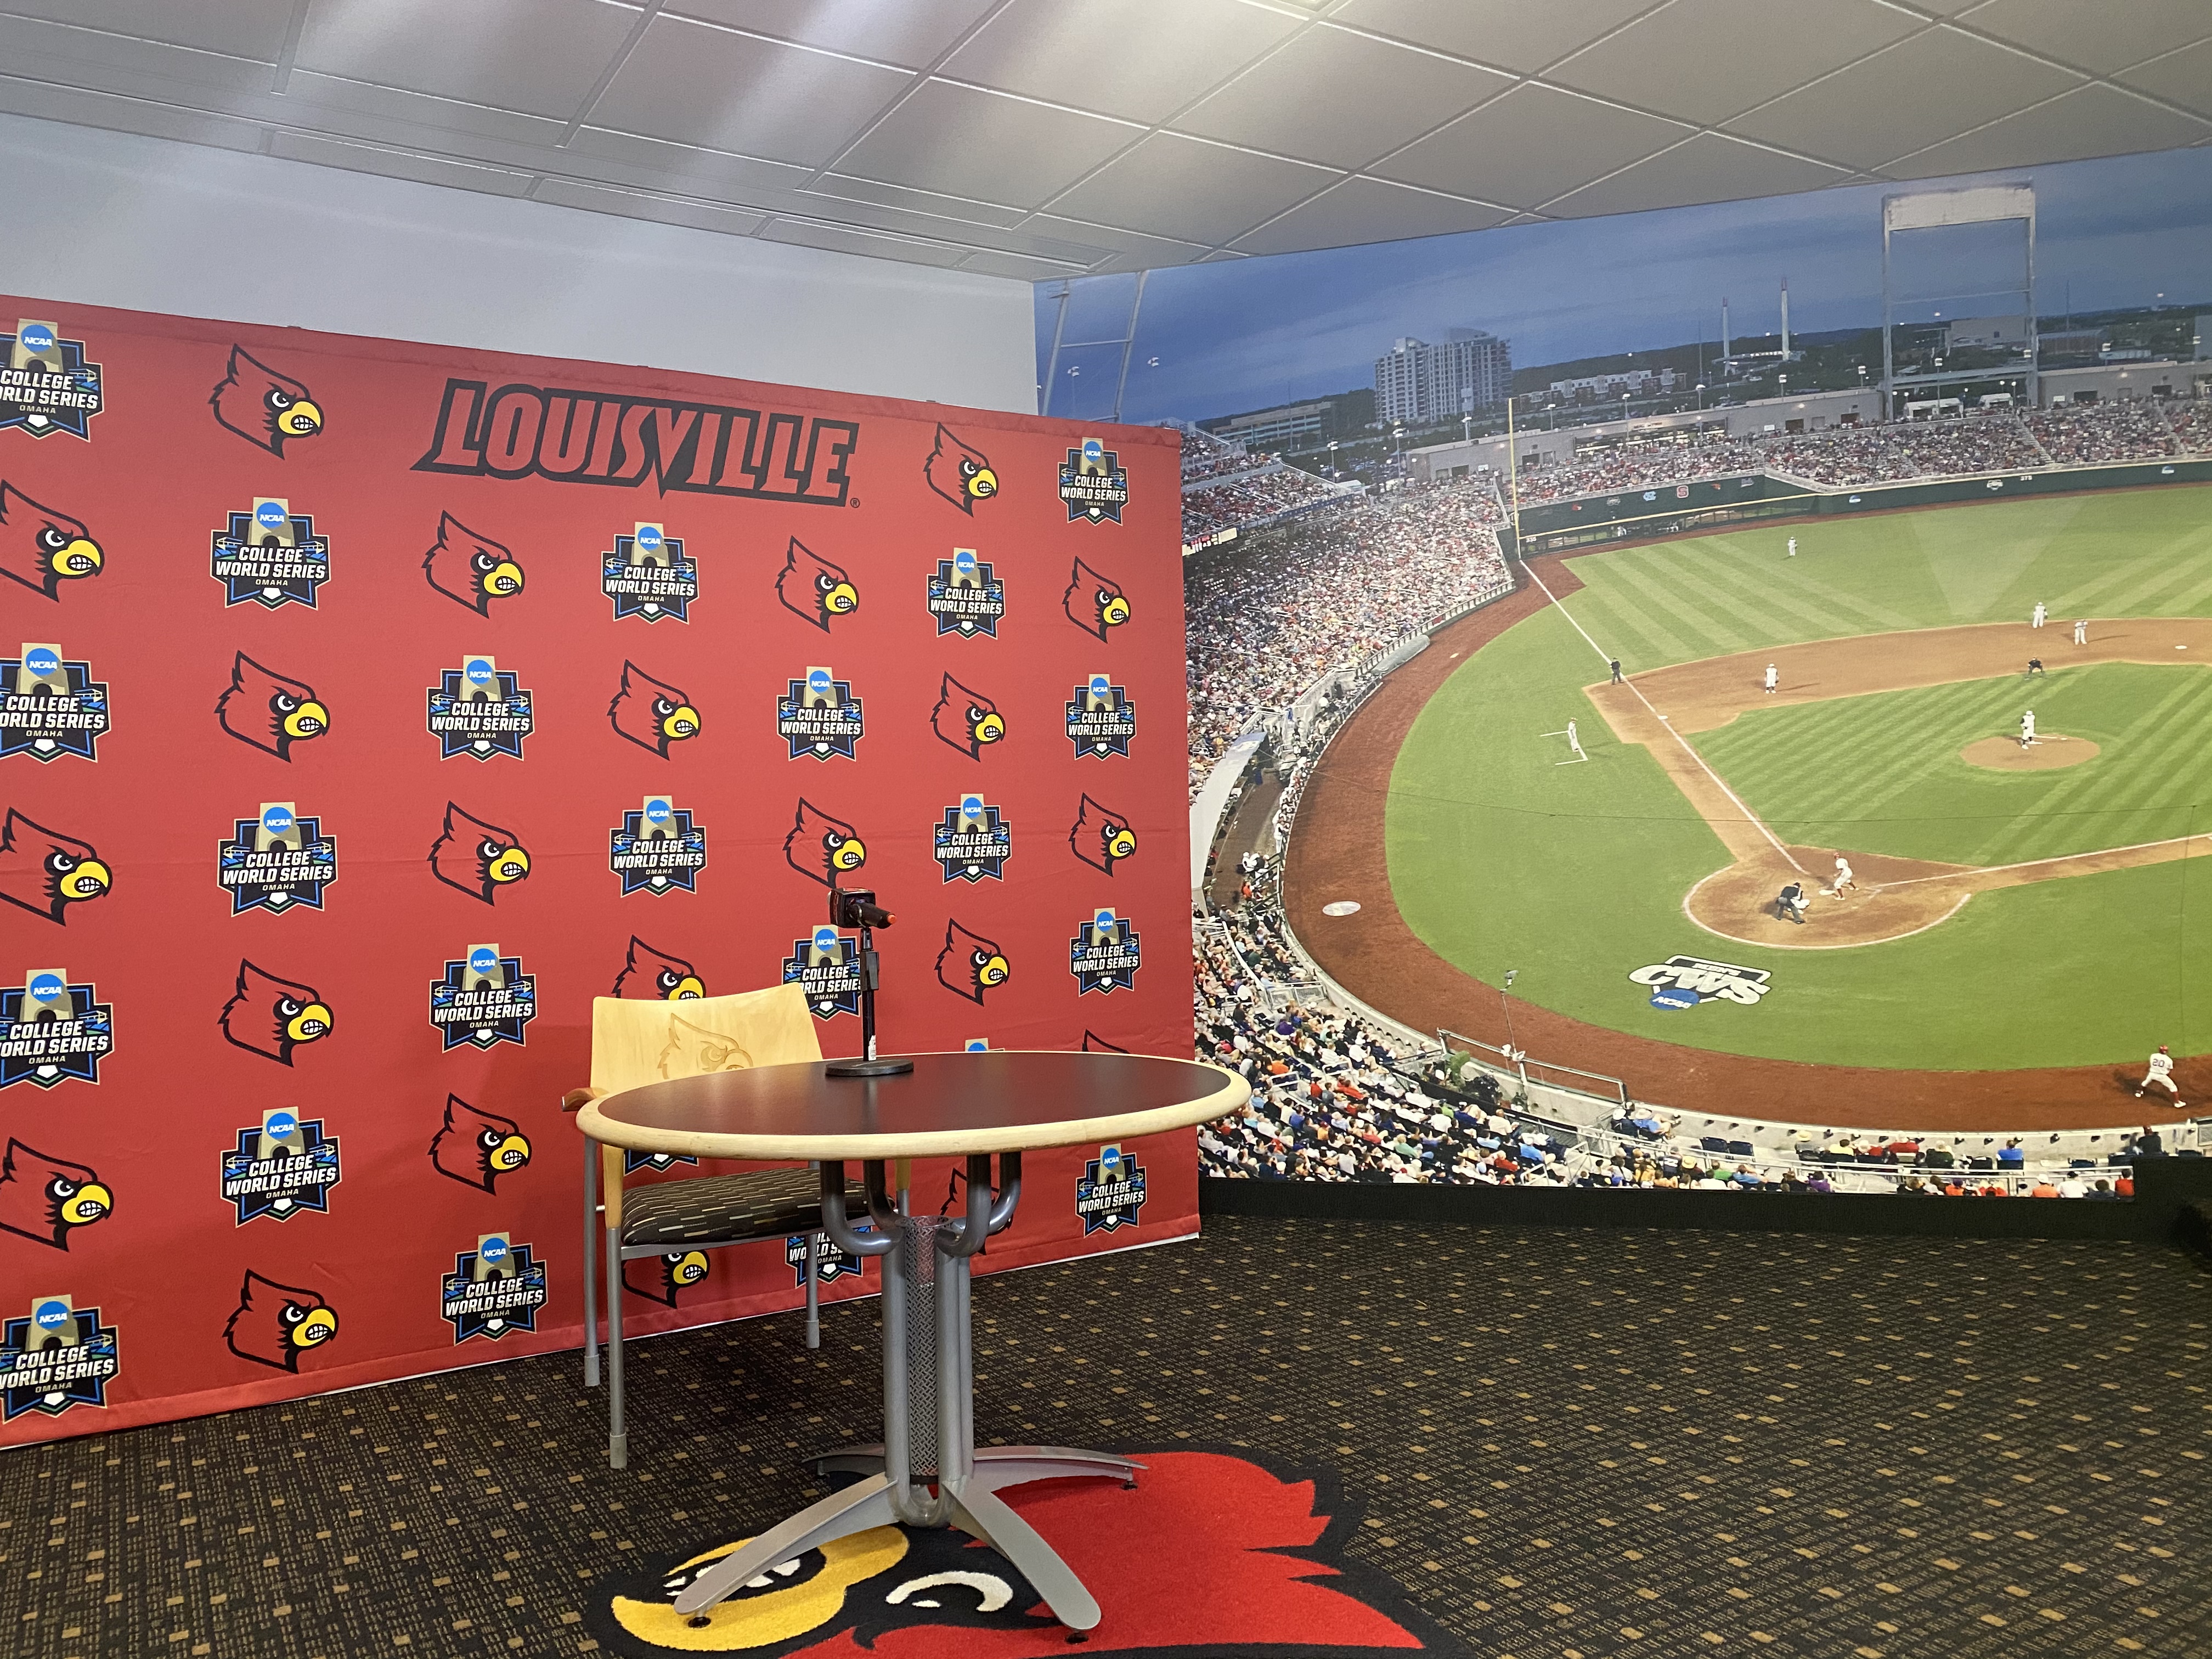 Louisville Baseball Media Day 2020 – The Crunch Zone